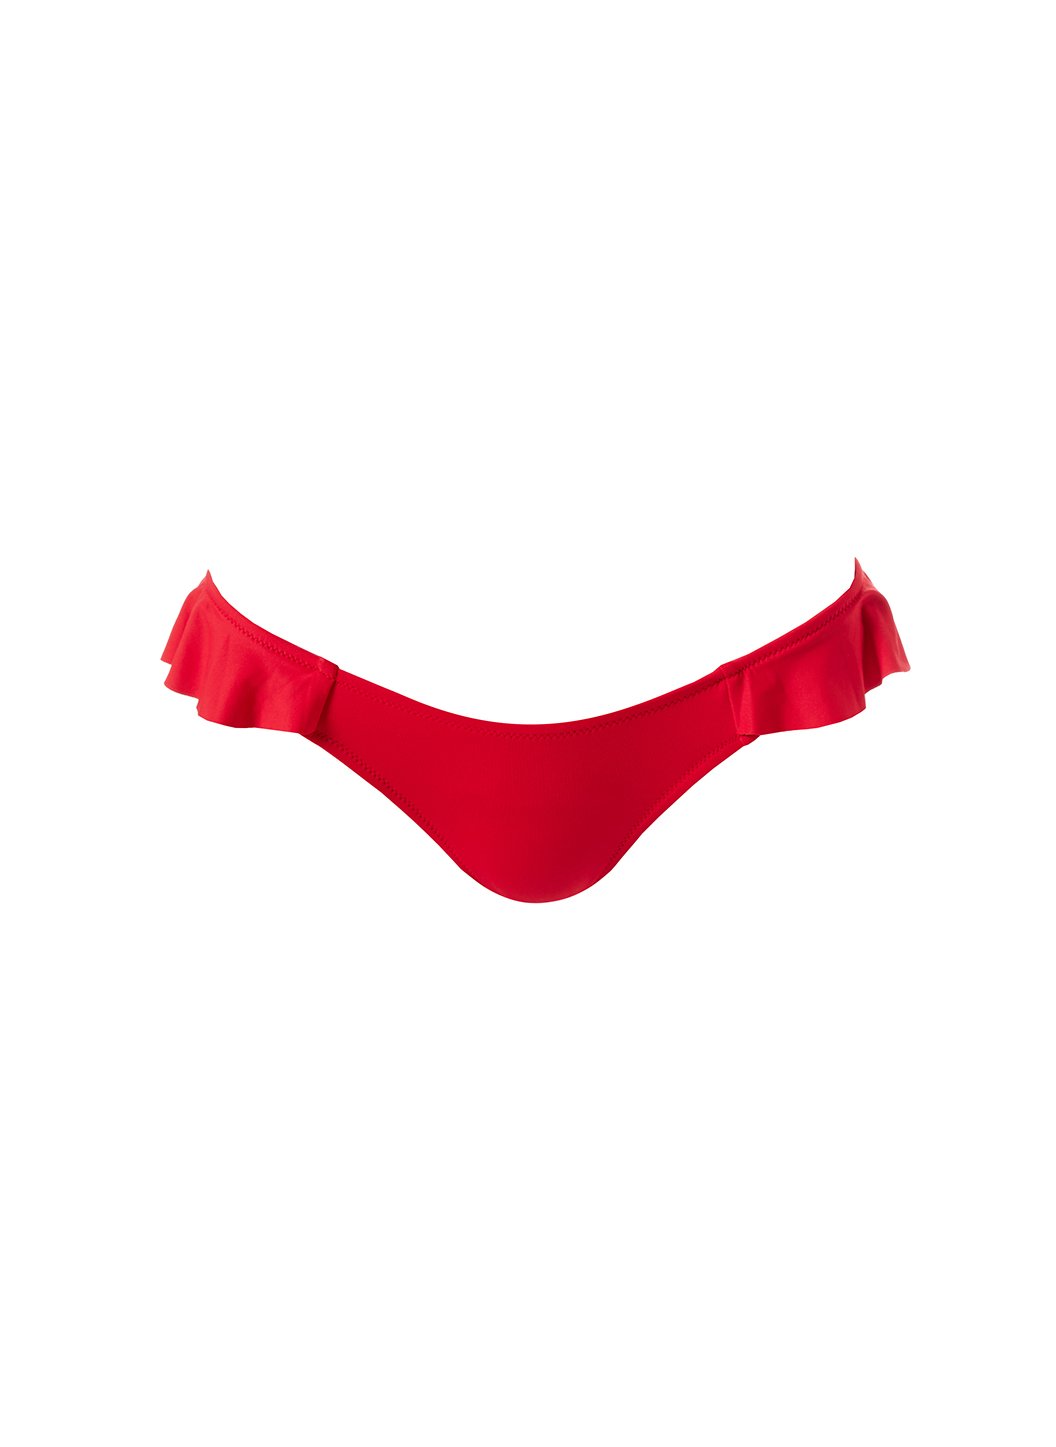 morocco-red-frill-one-shoulder-bikini-bottom